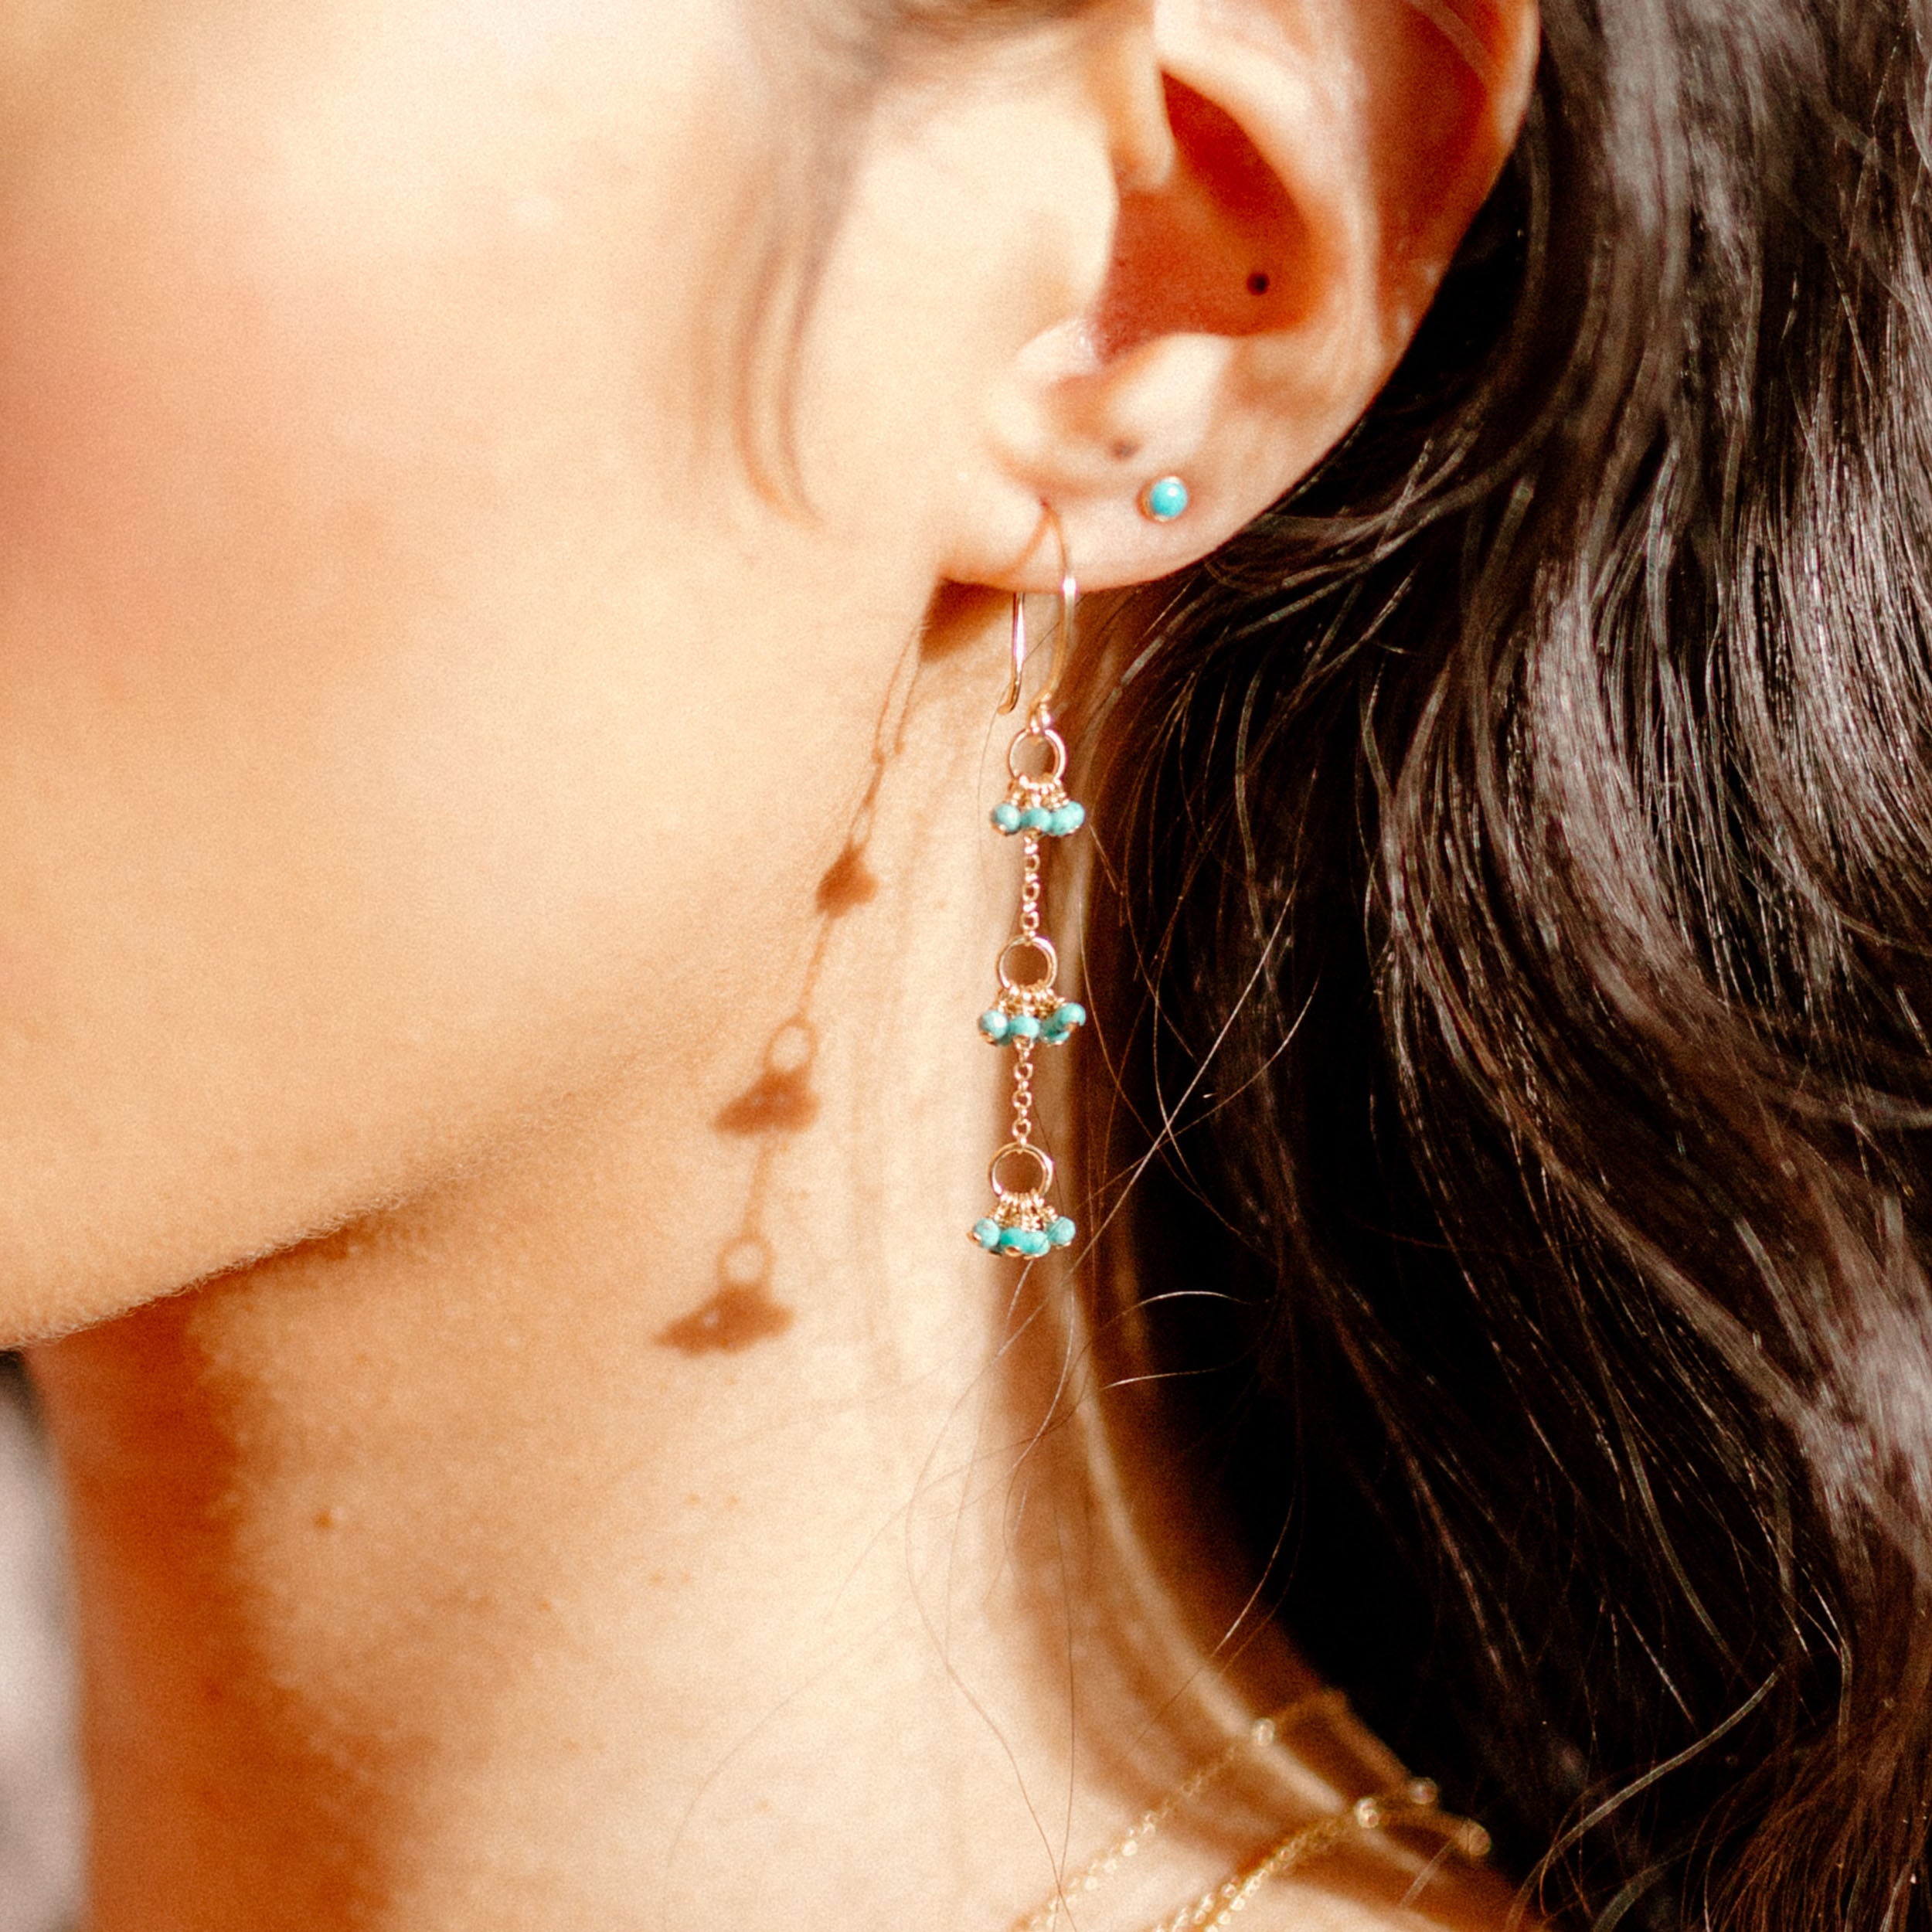 Beaded Turquoise Cluster Gemstone Earrings - Favor Jewelry